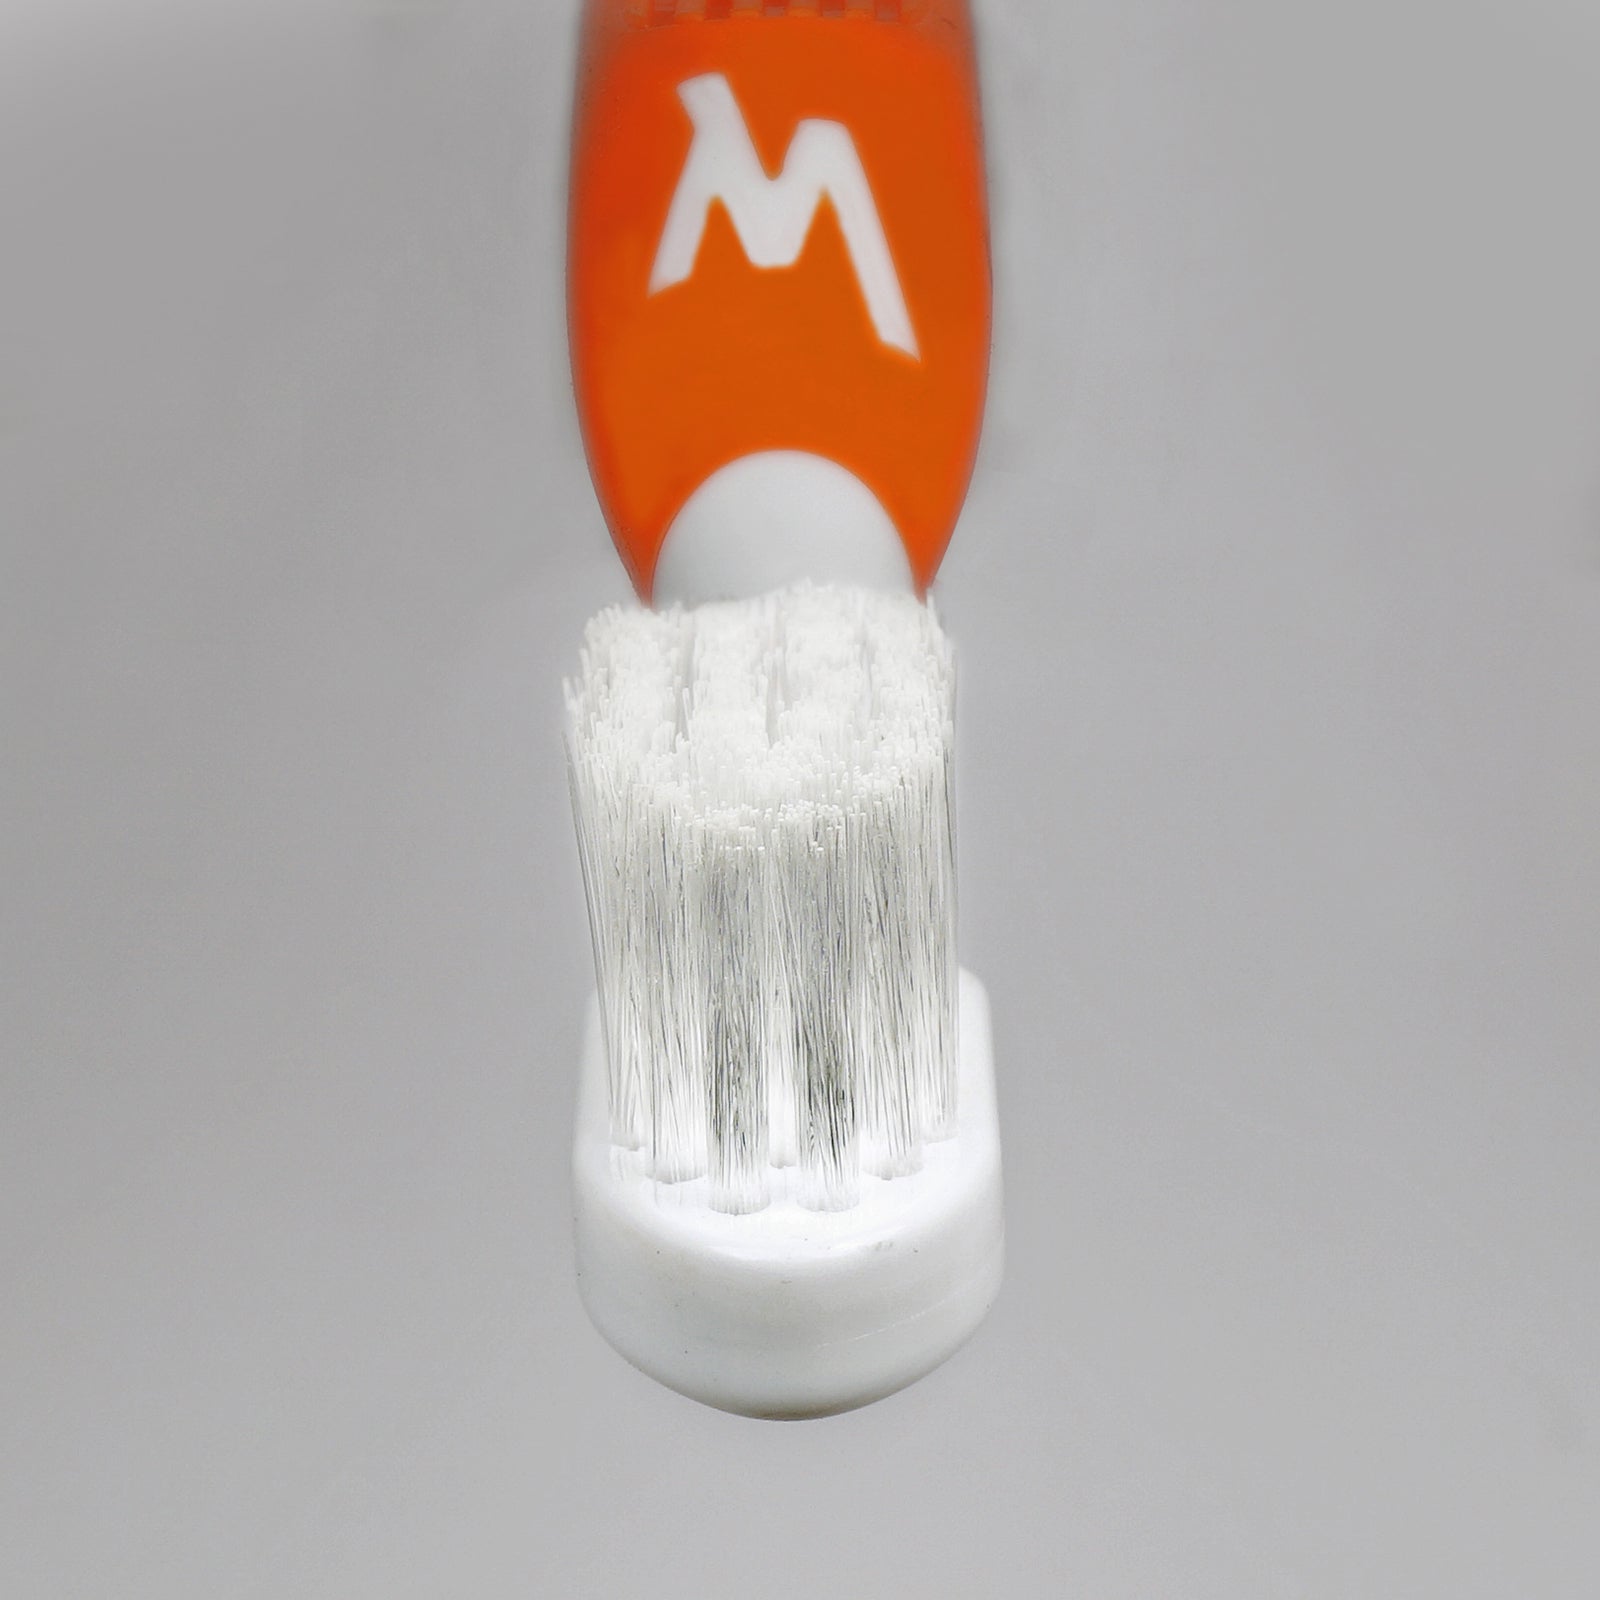 BrushCare Professional Regular Soft Toothbrush